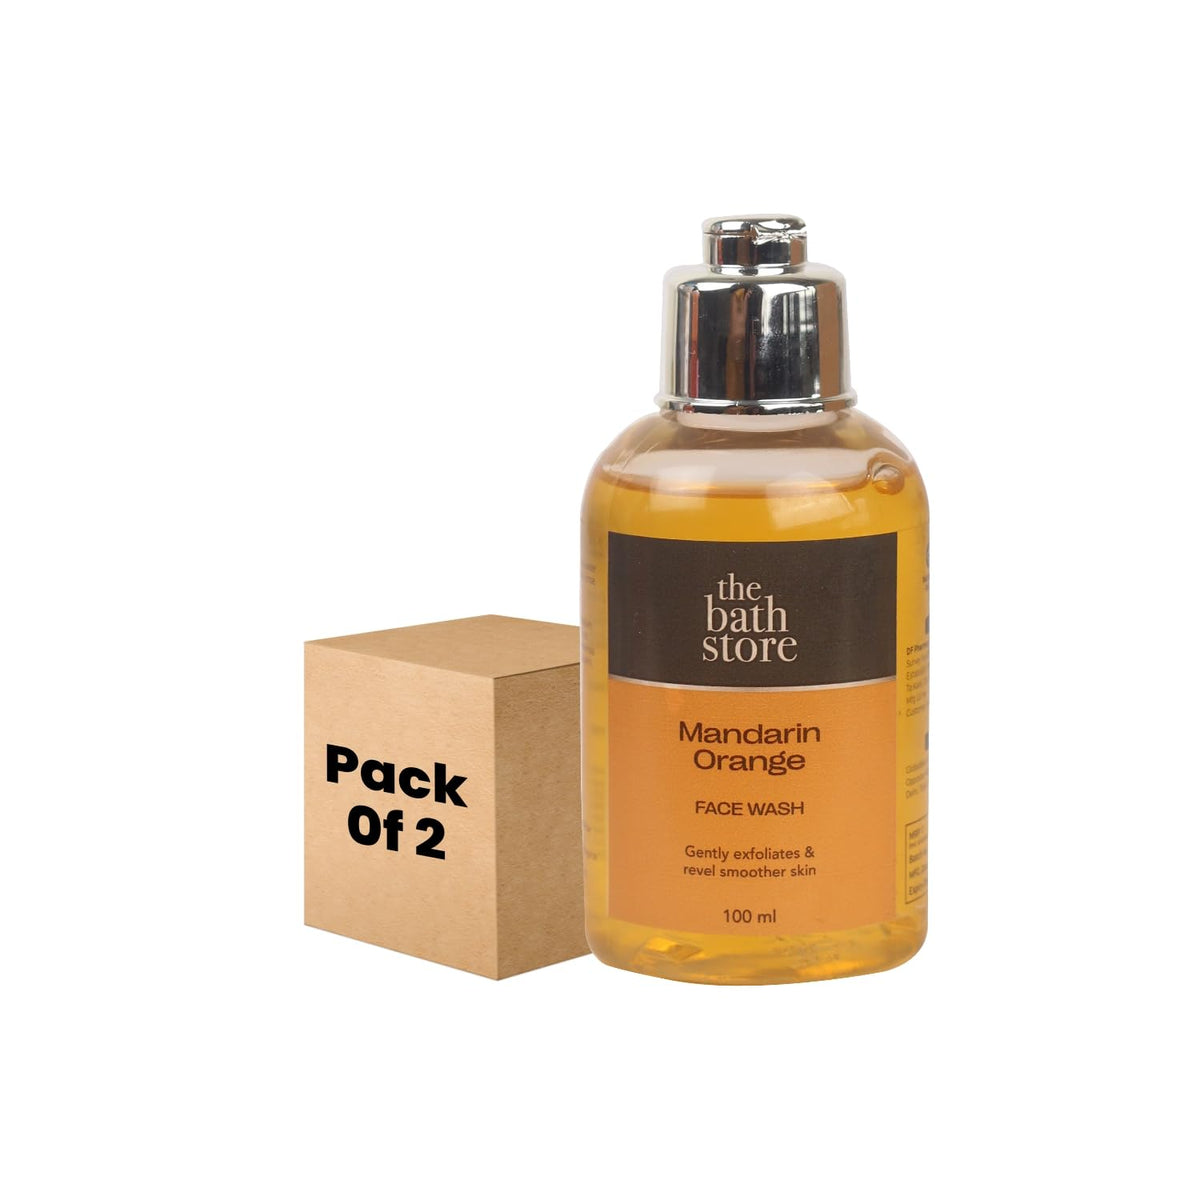 The Bath Store Mandarin Orange Face Wash - Gentle Exfoliation | Deep Cleansing - 100ml (Pack of 2)